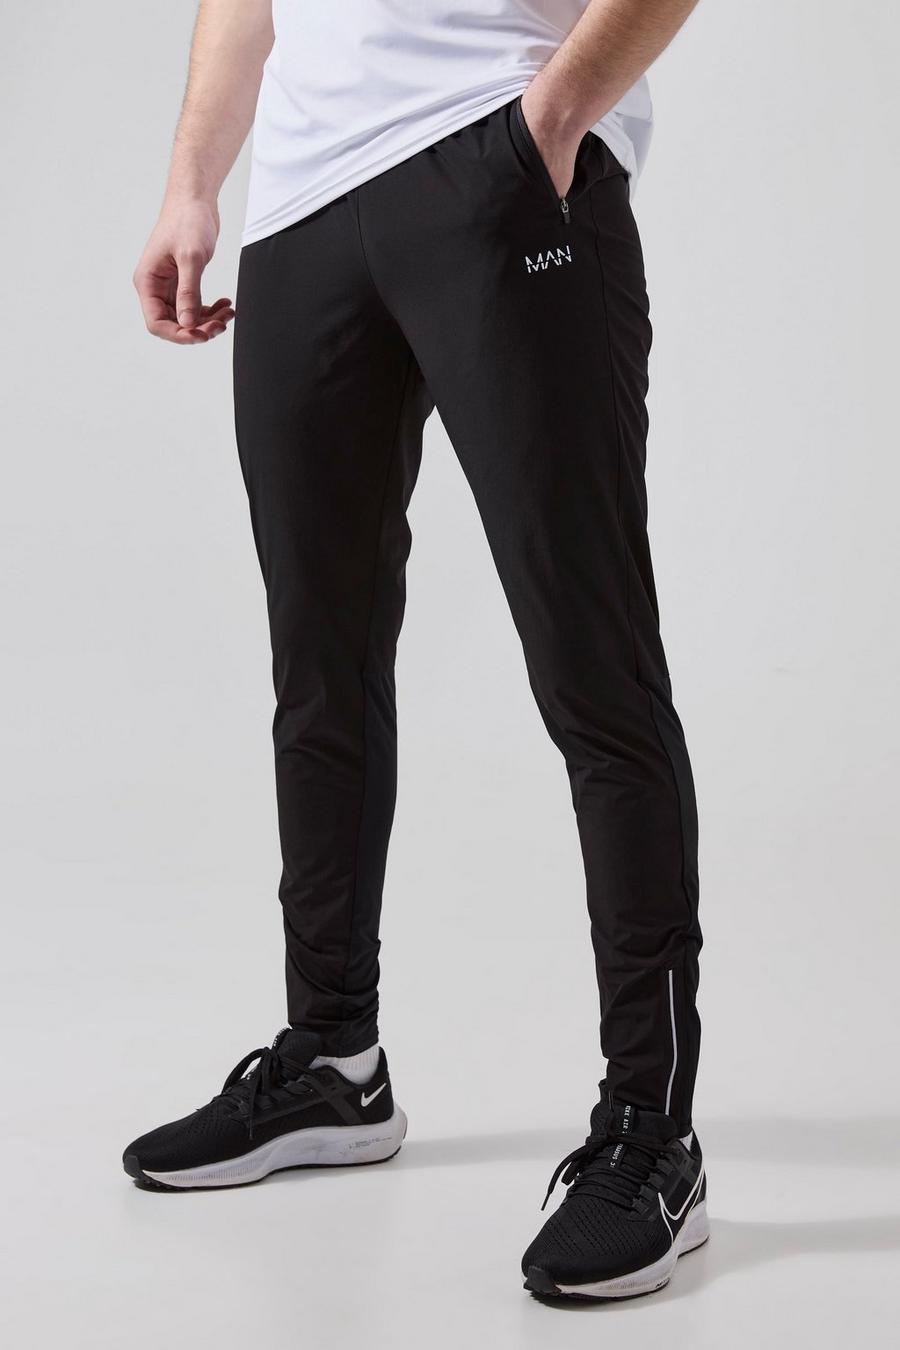 Pack de 2 pantalones de chándal Tall MAN Active deportivos ligeros, Black